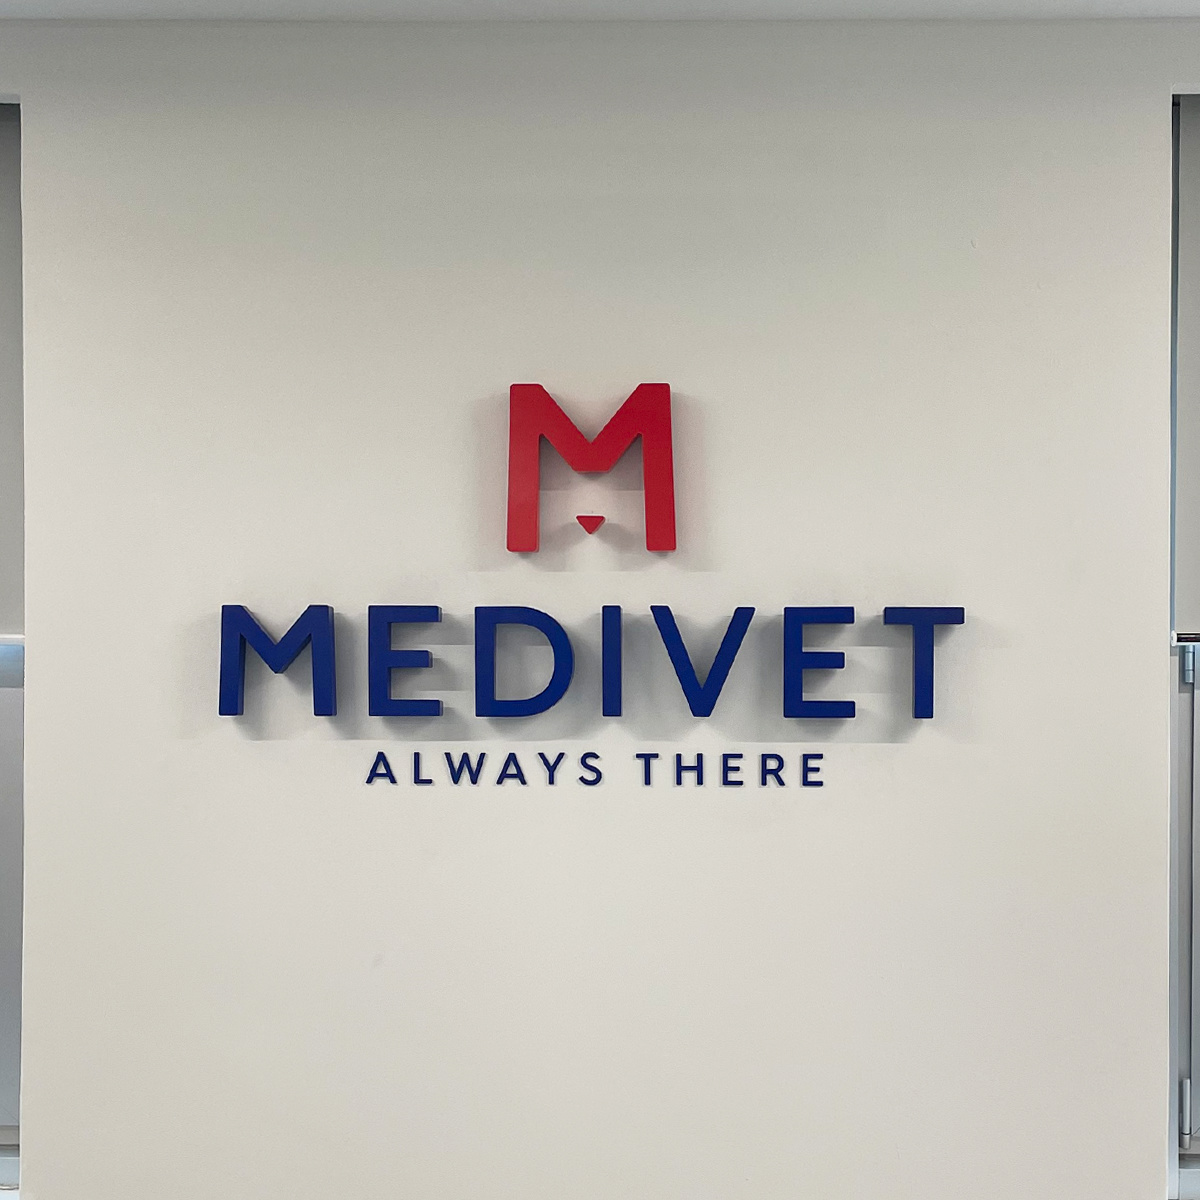 Built-up metal Medivet logo fixed to internal wall